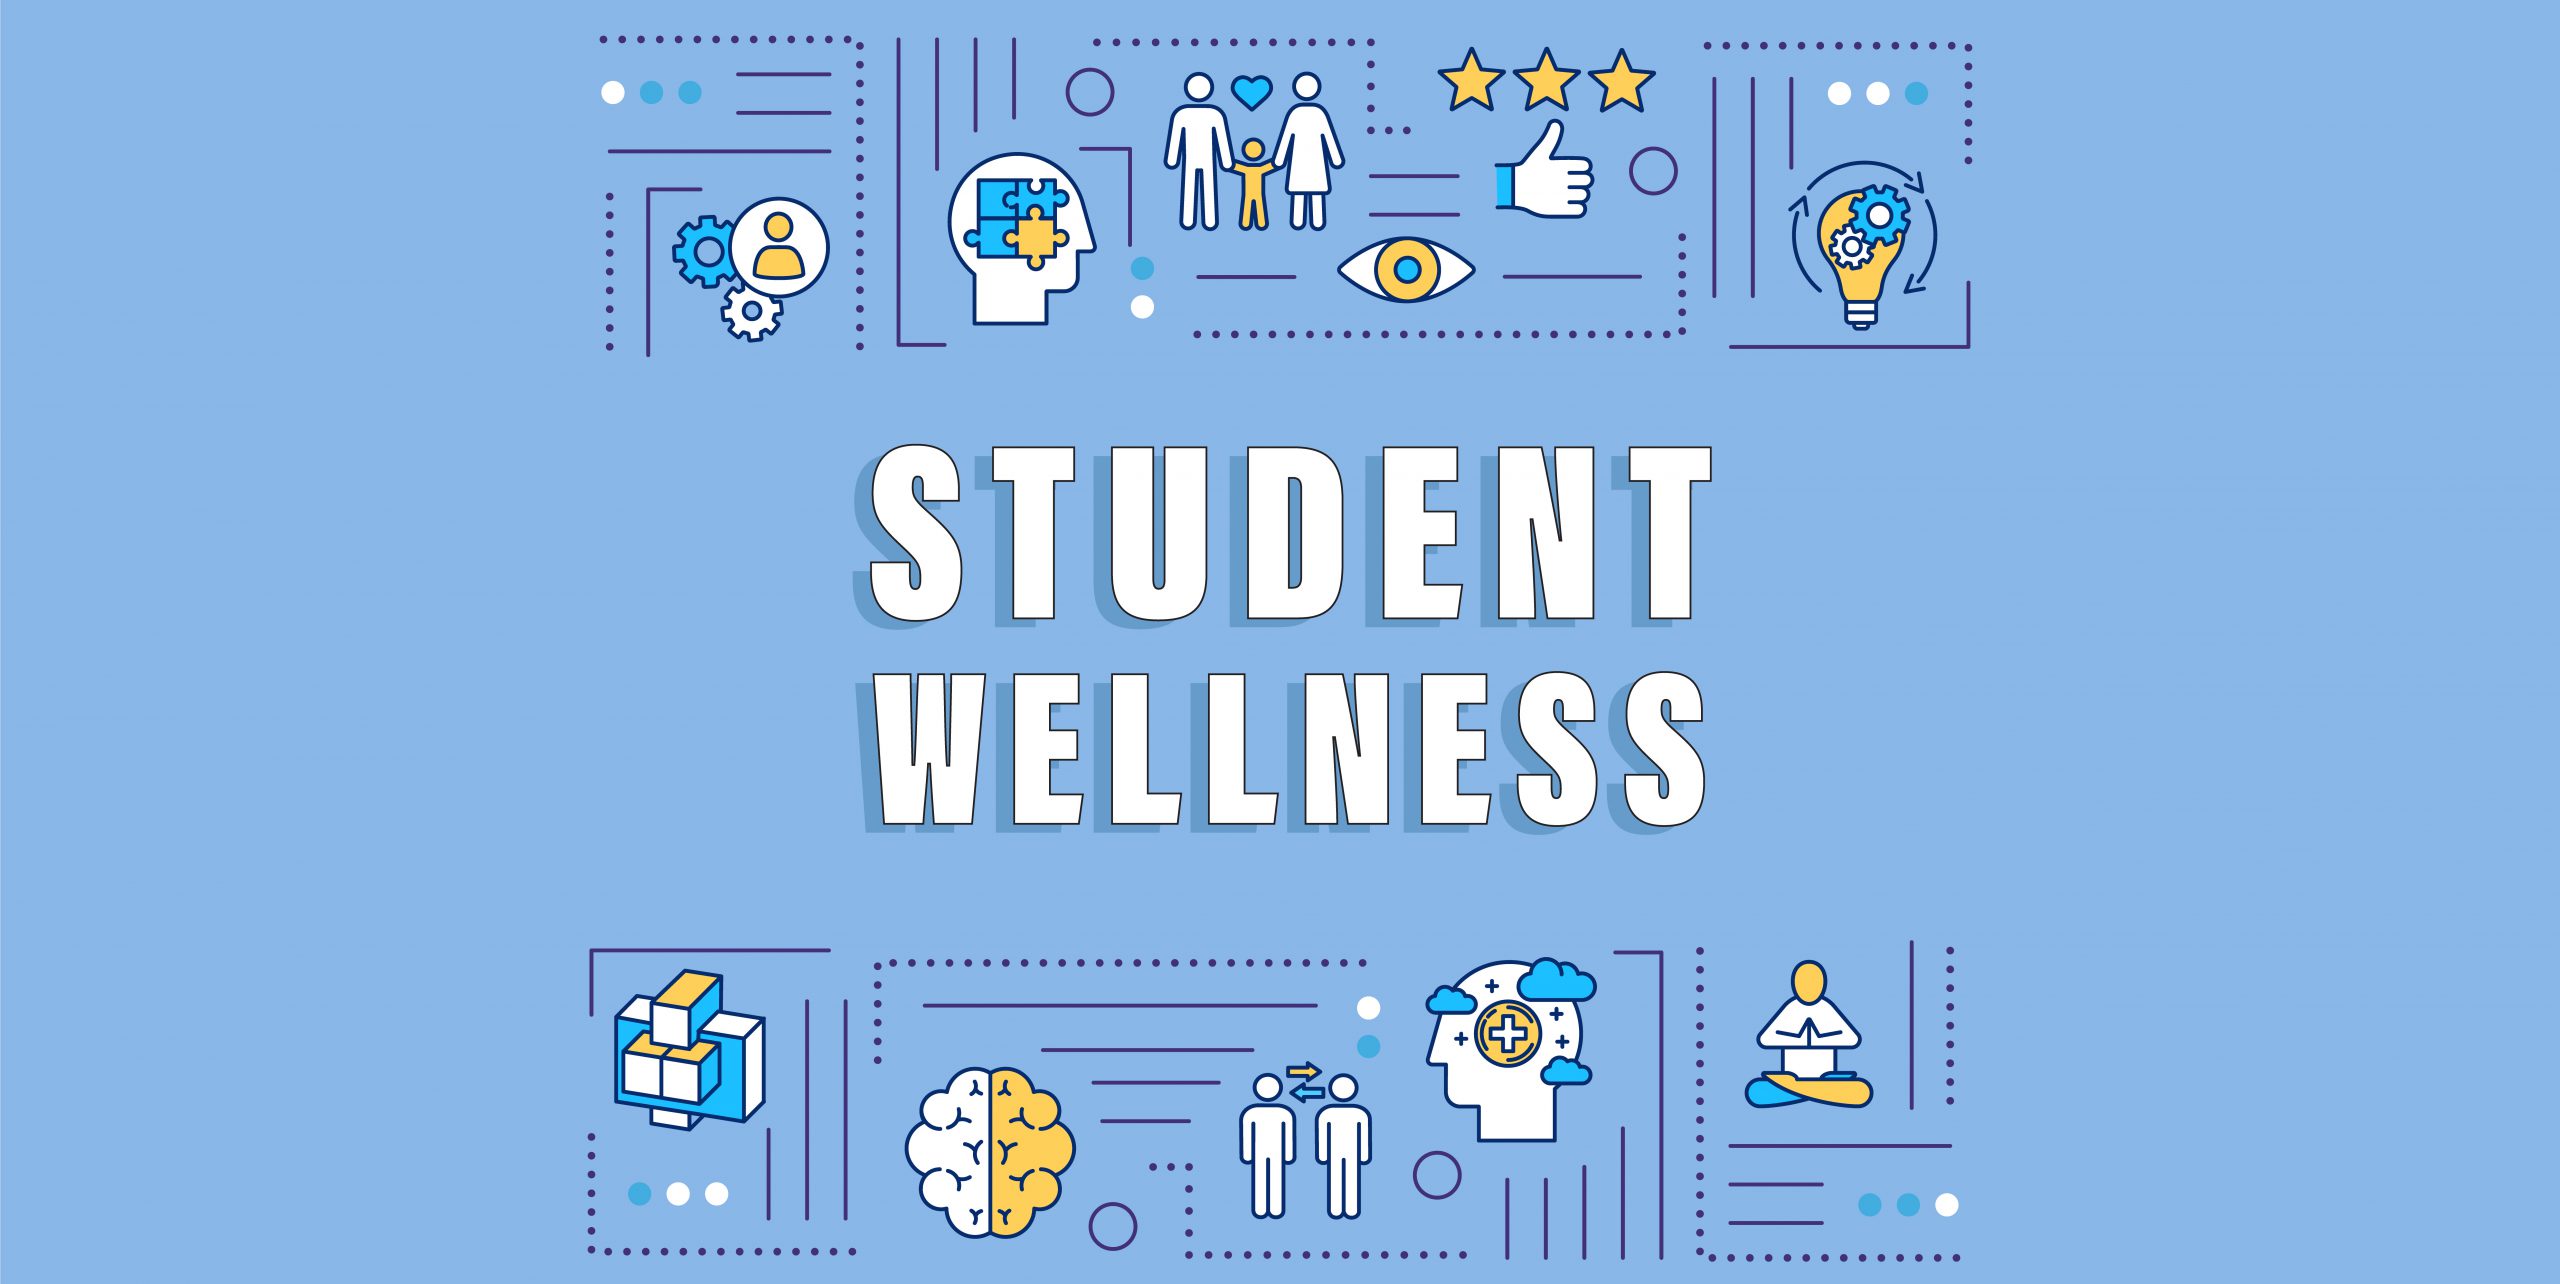 Student Wellness image for recourses over winter break.